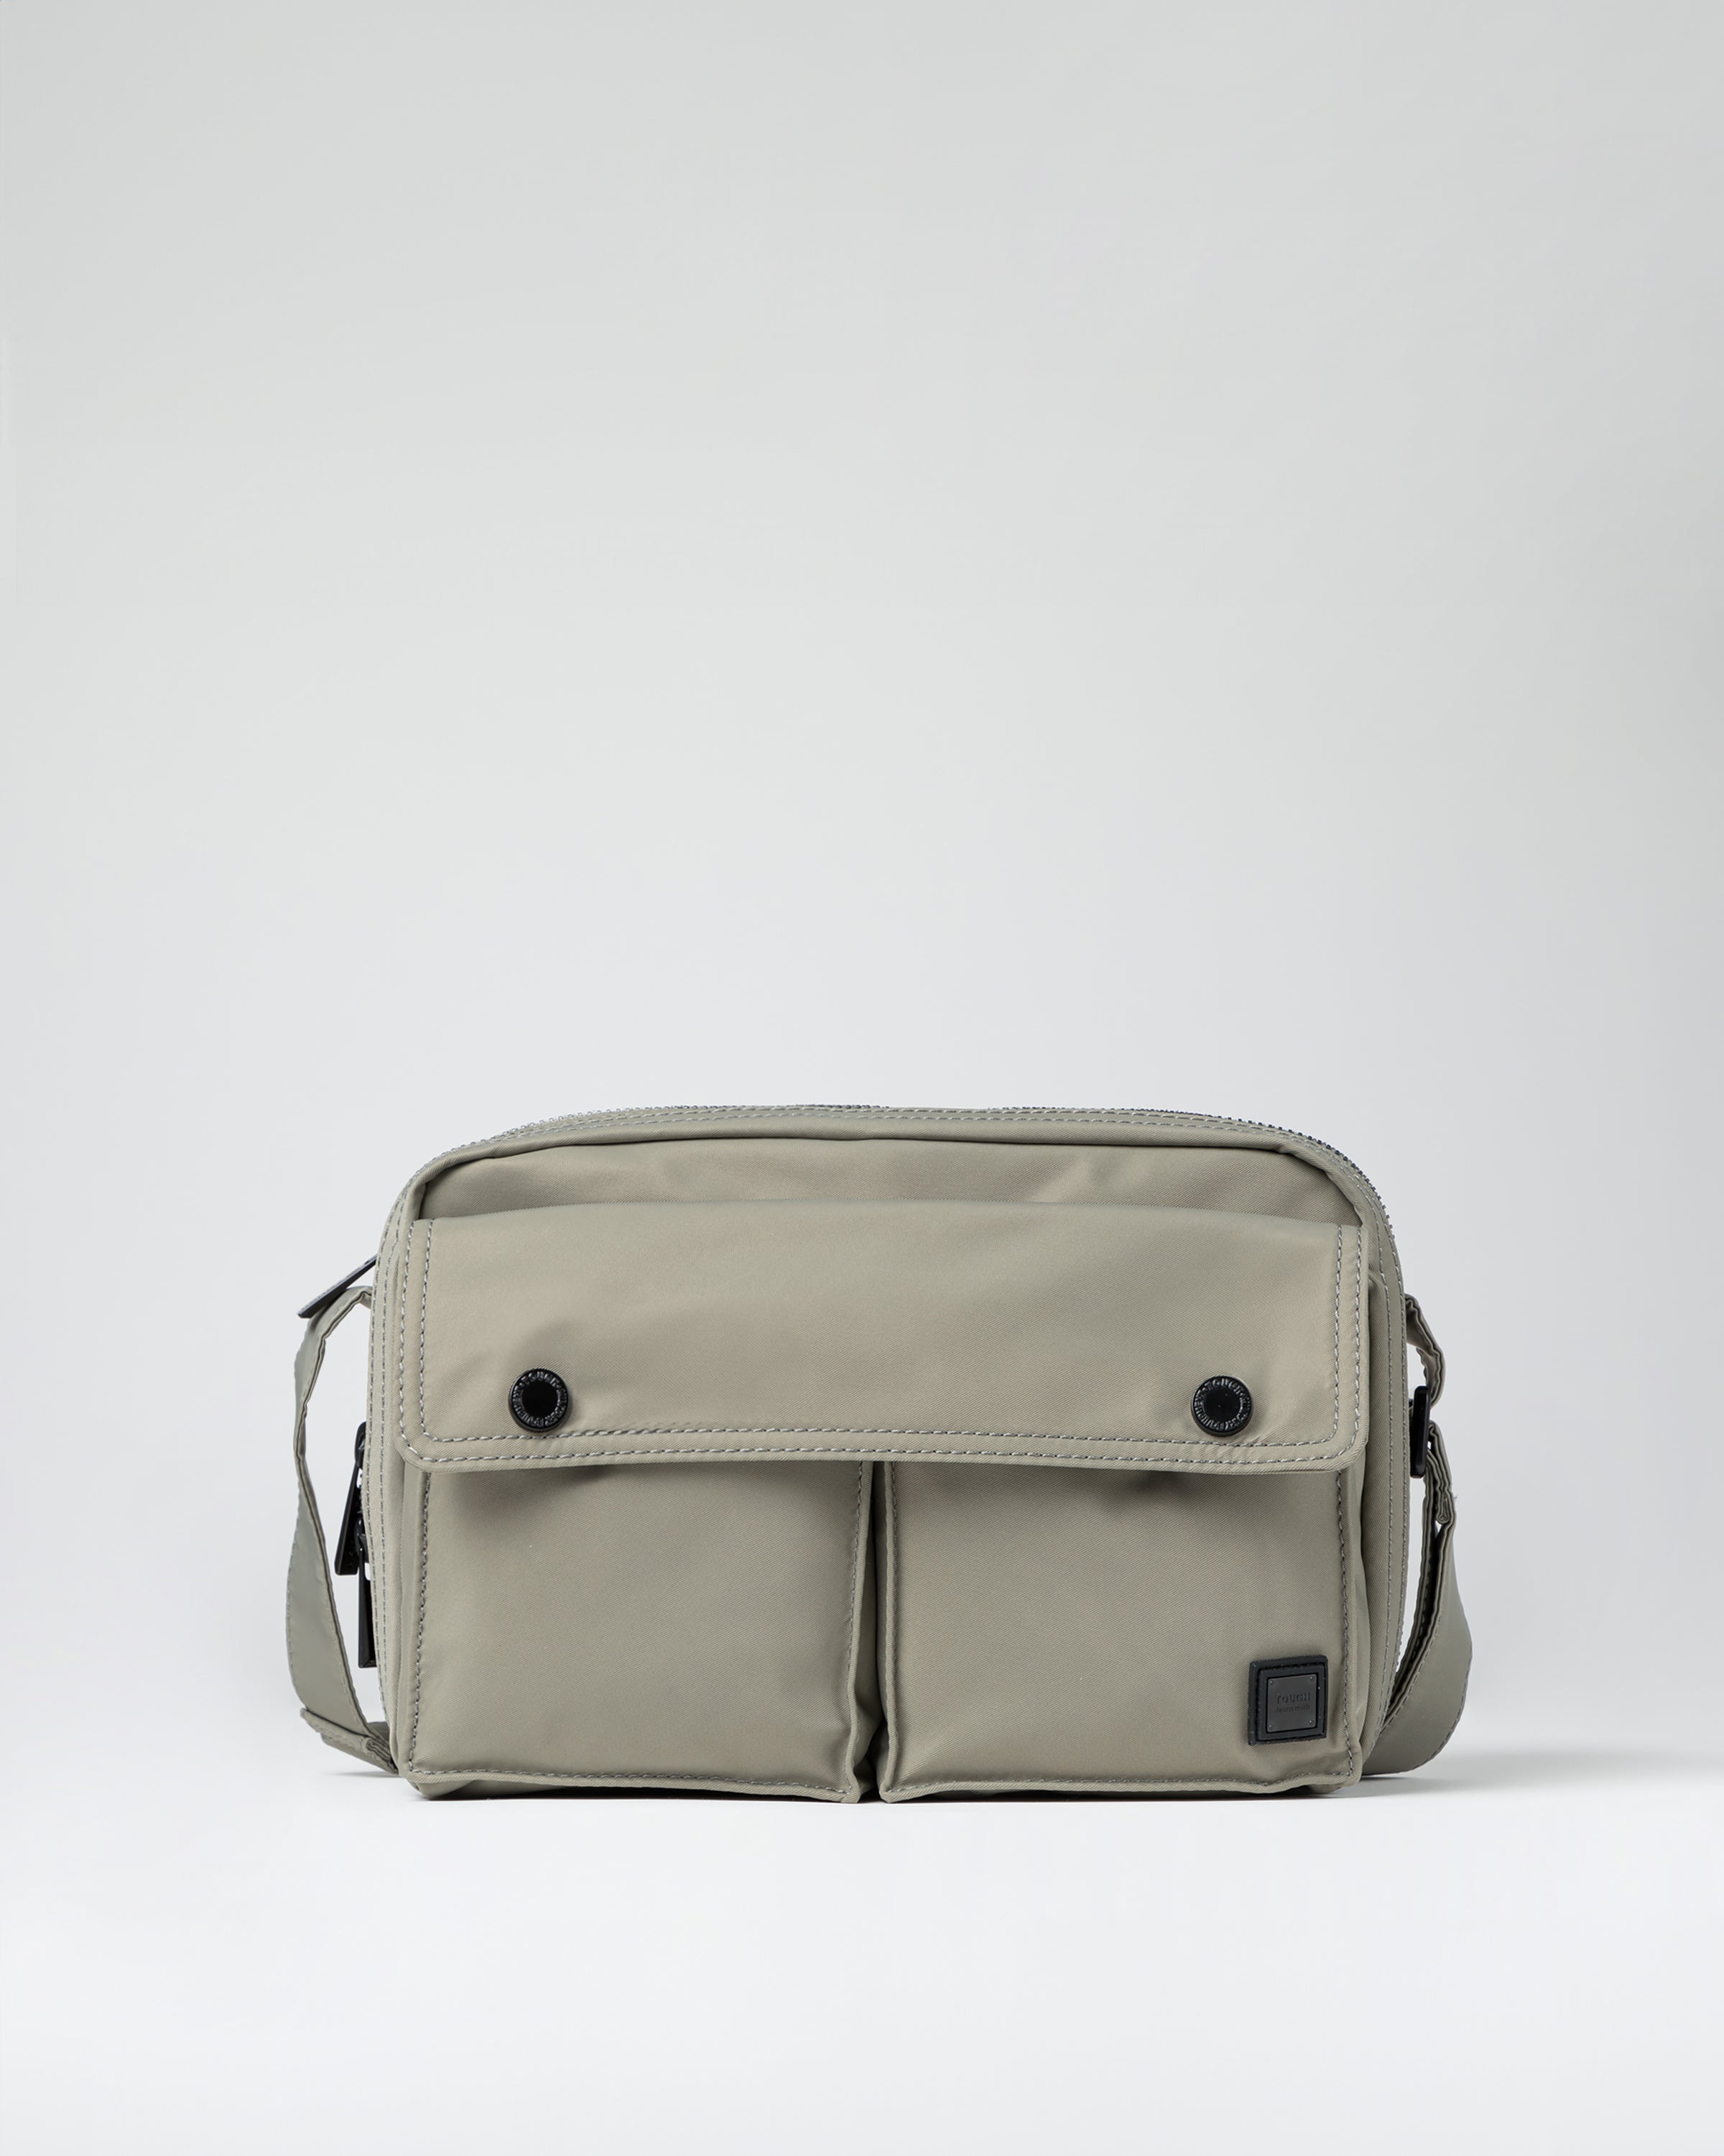 TOUGH JEANSMITH Jingle (medium size) shoulder bag #TB223-003